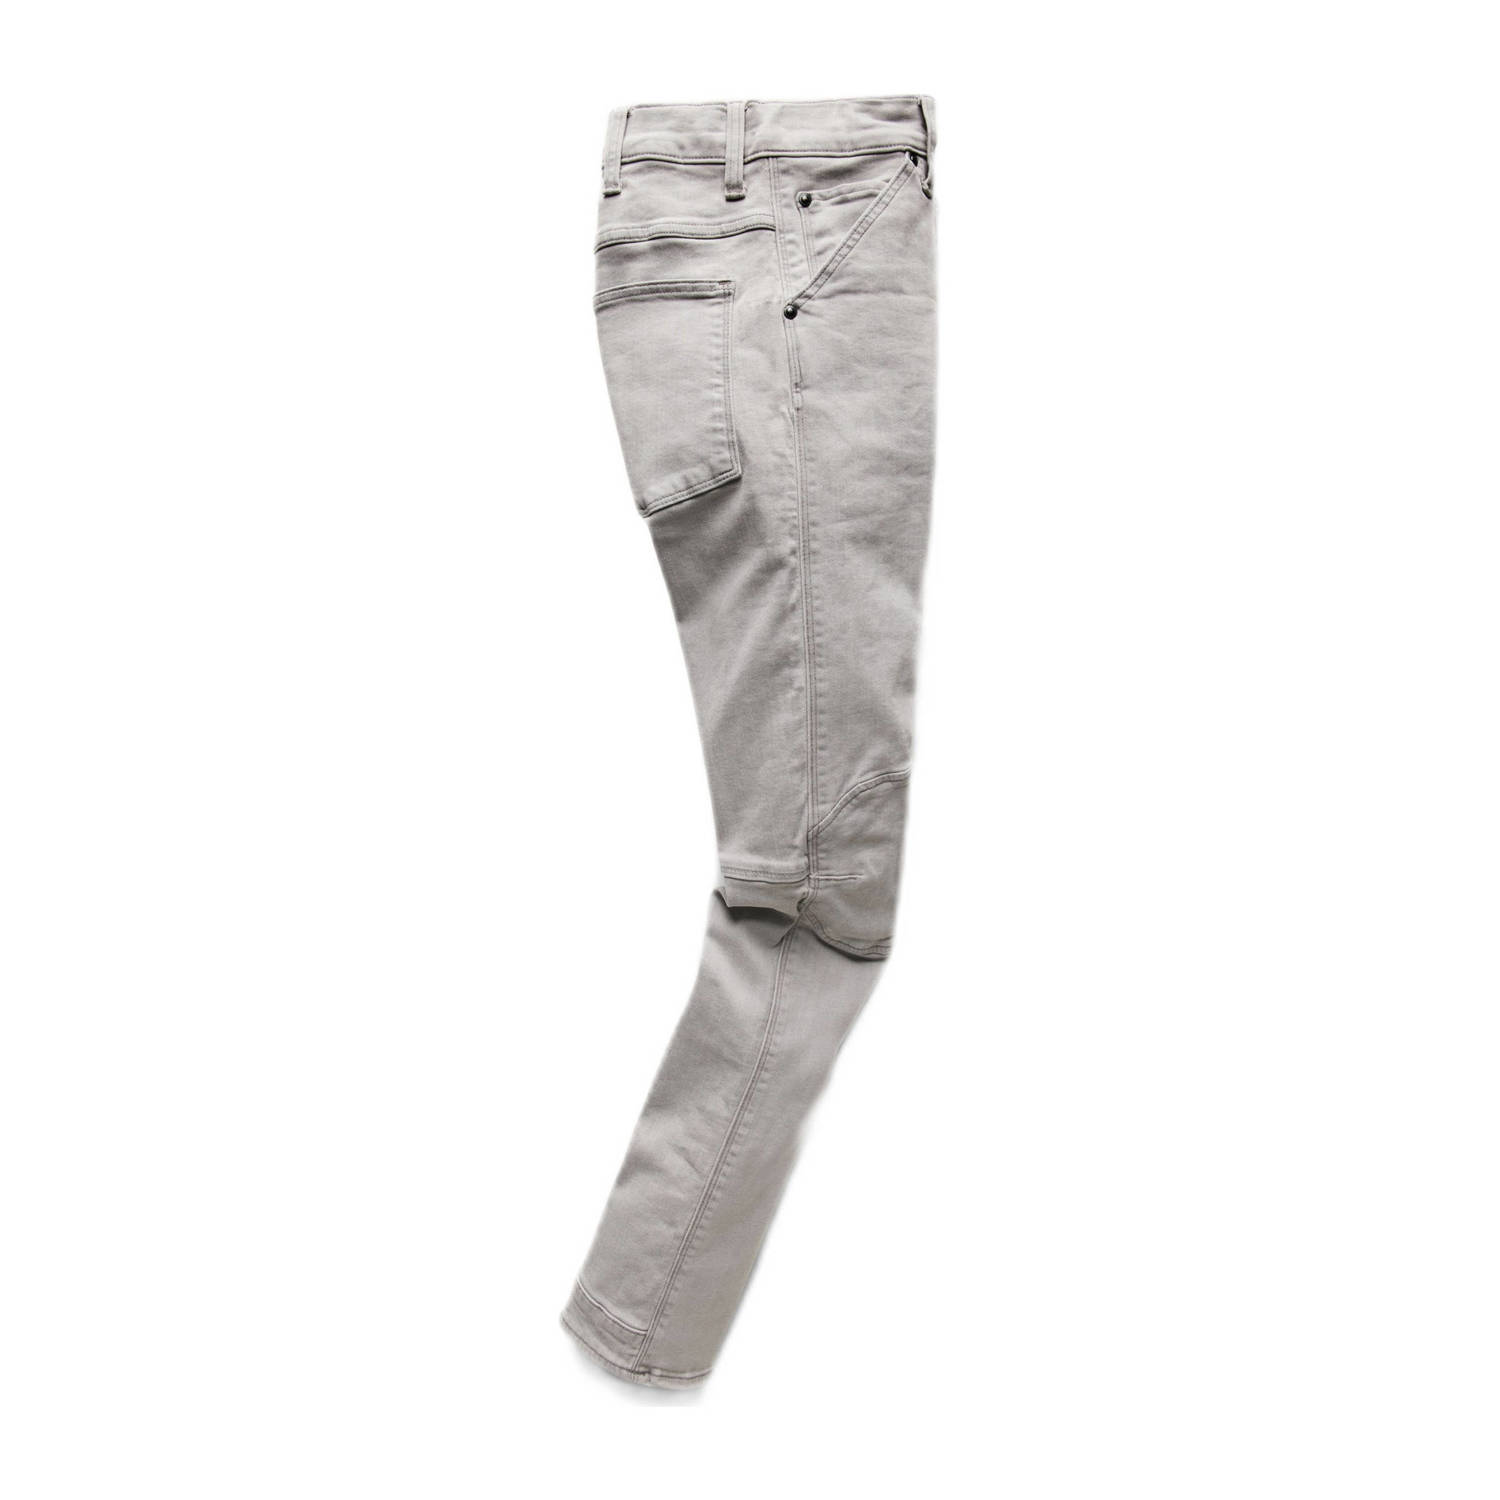 G-Star RAW slim fit jeans beach faded grey